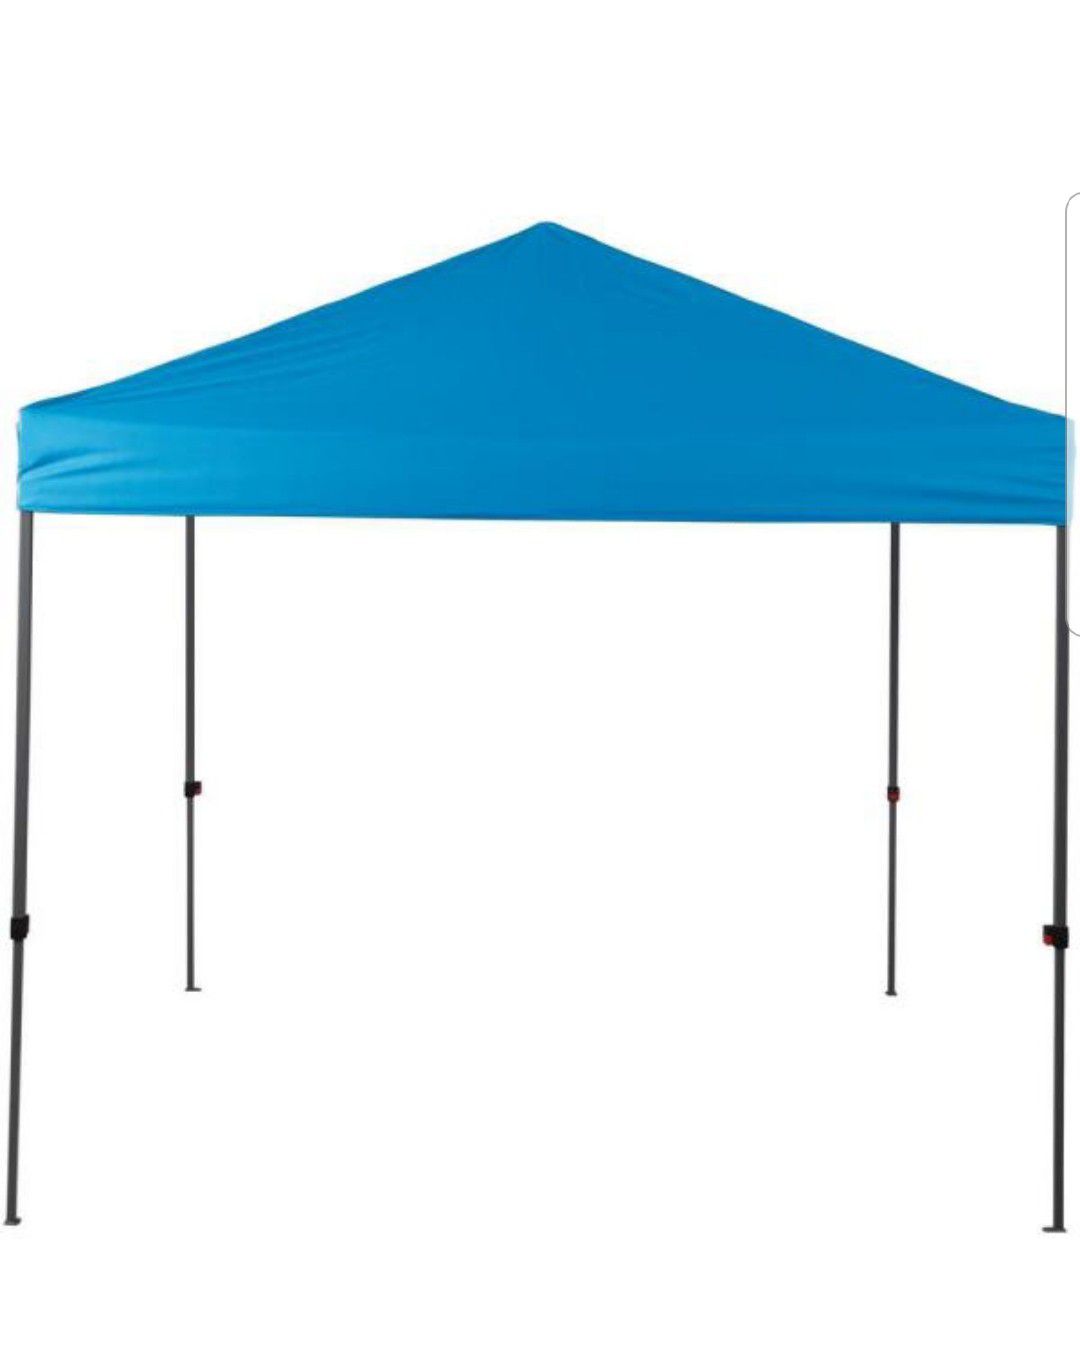 Everbilt NS G64-B 8 ft. x 8 ft. Blue Straight Leg Instant Canopy Pop Up Tent